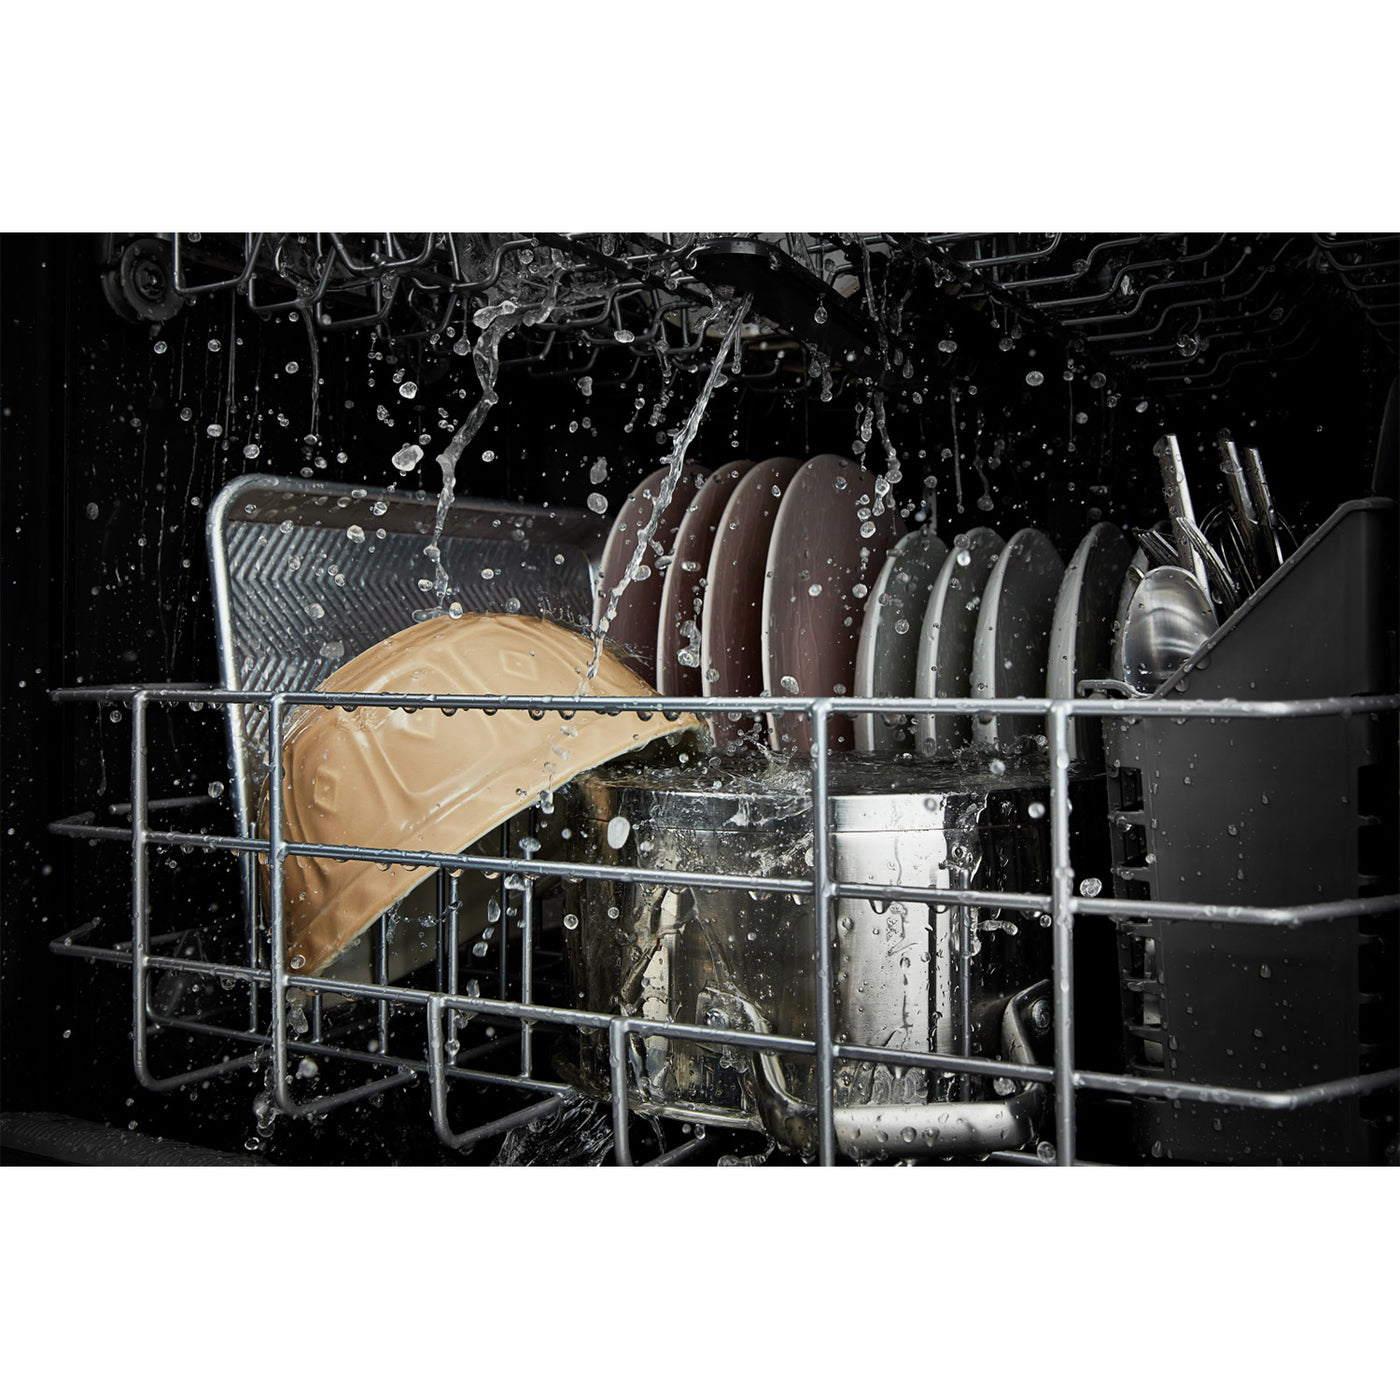 Whirlpool 24" Fingerprint Resistant Stainless Steel Dishwasher (55 dBA) - WDP540HAMZ